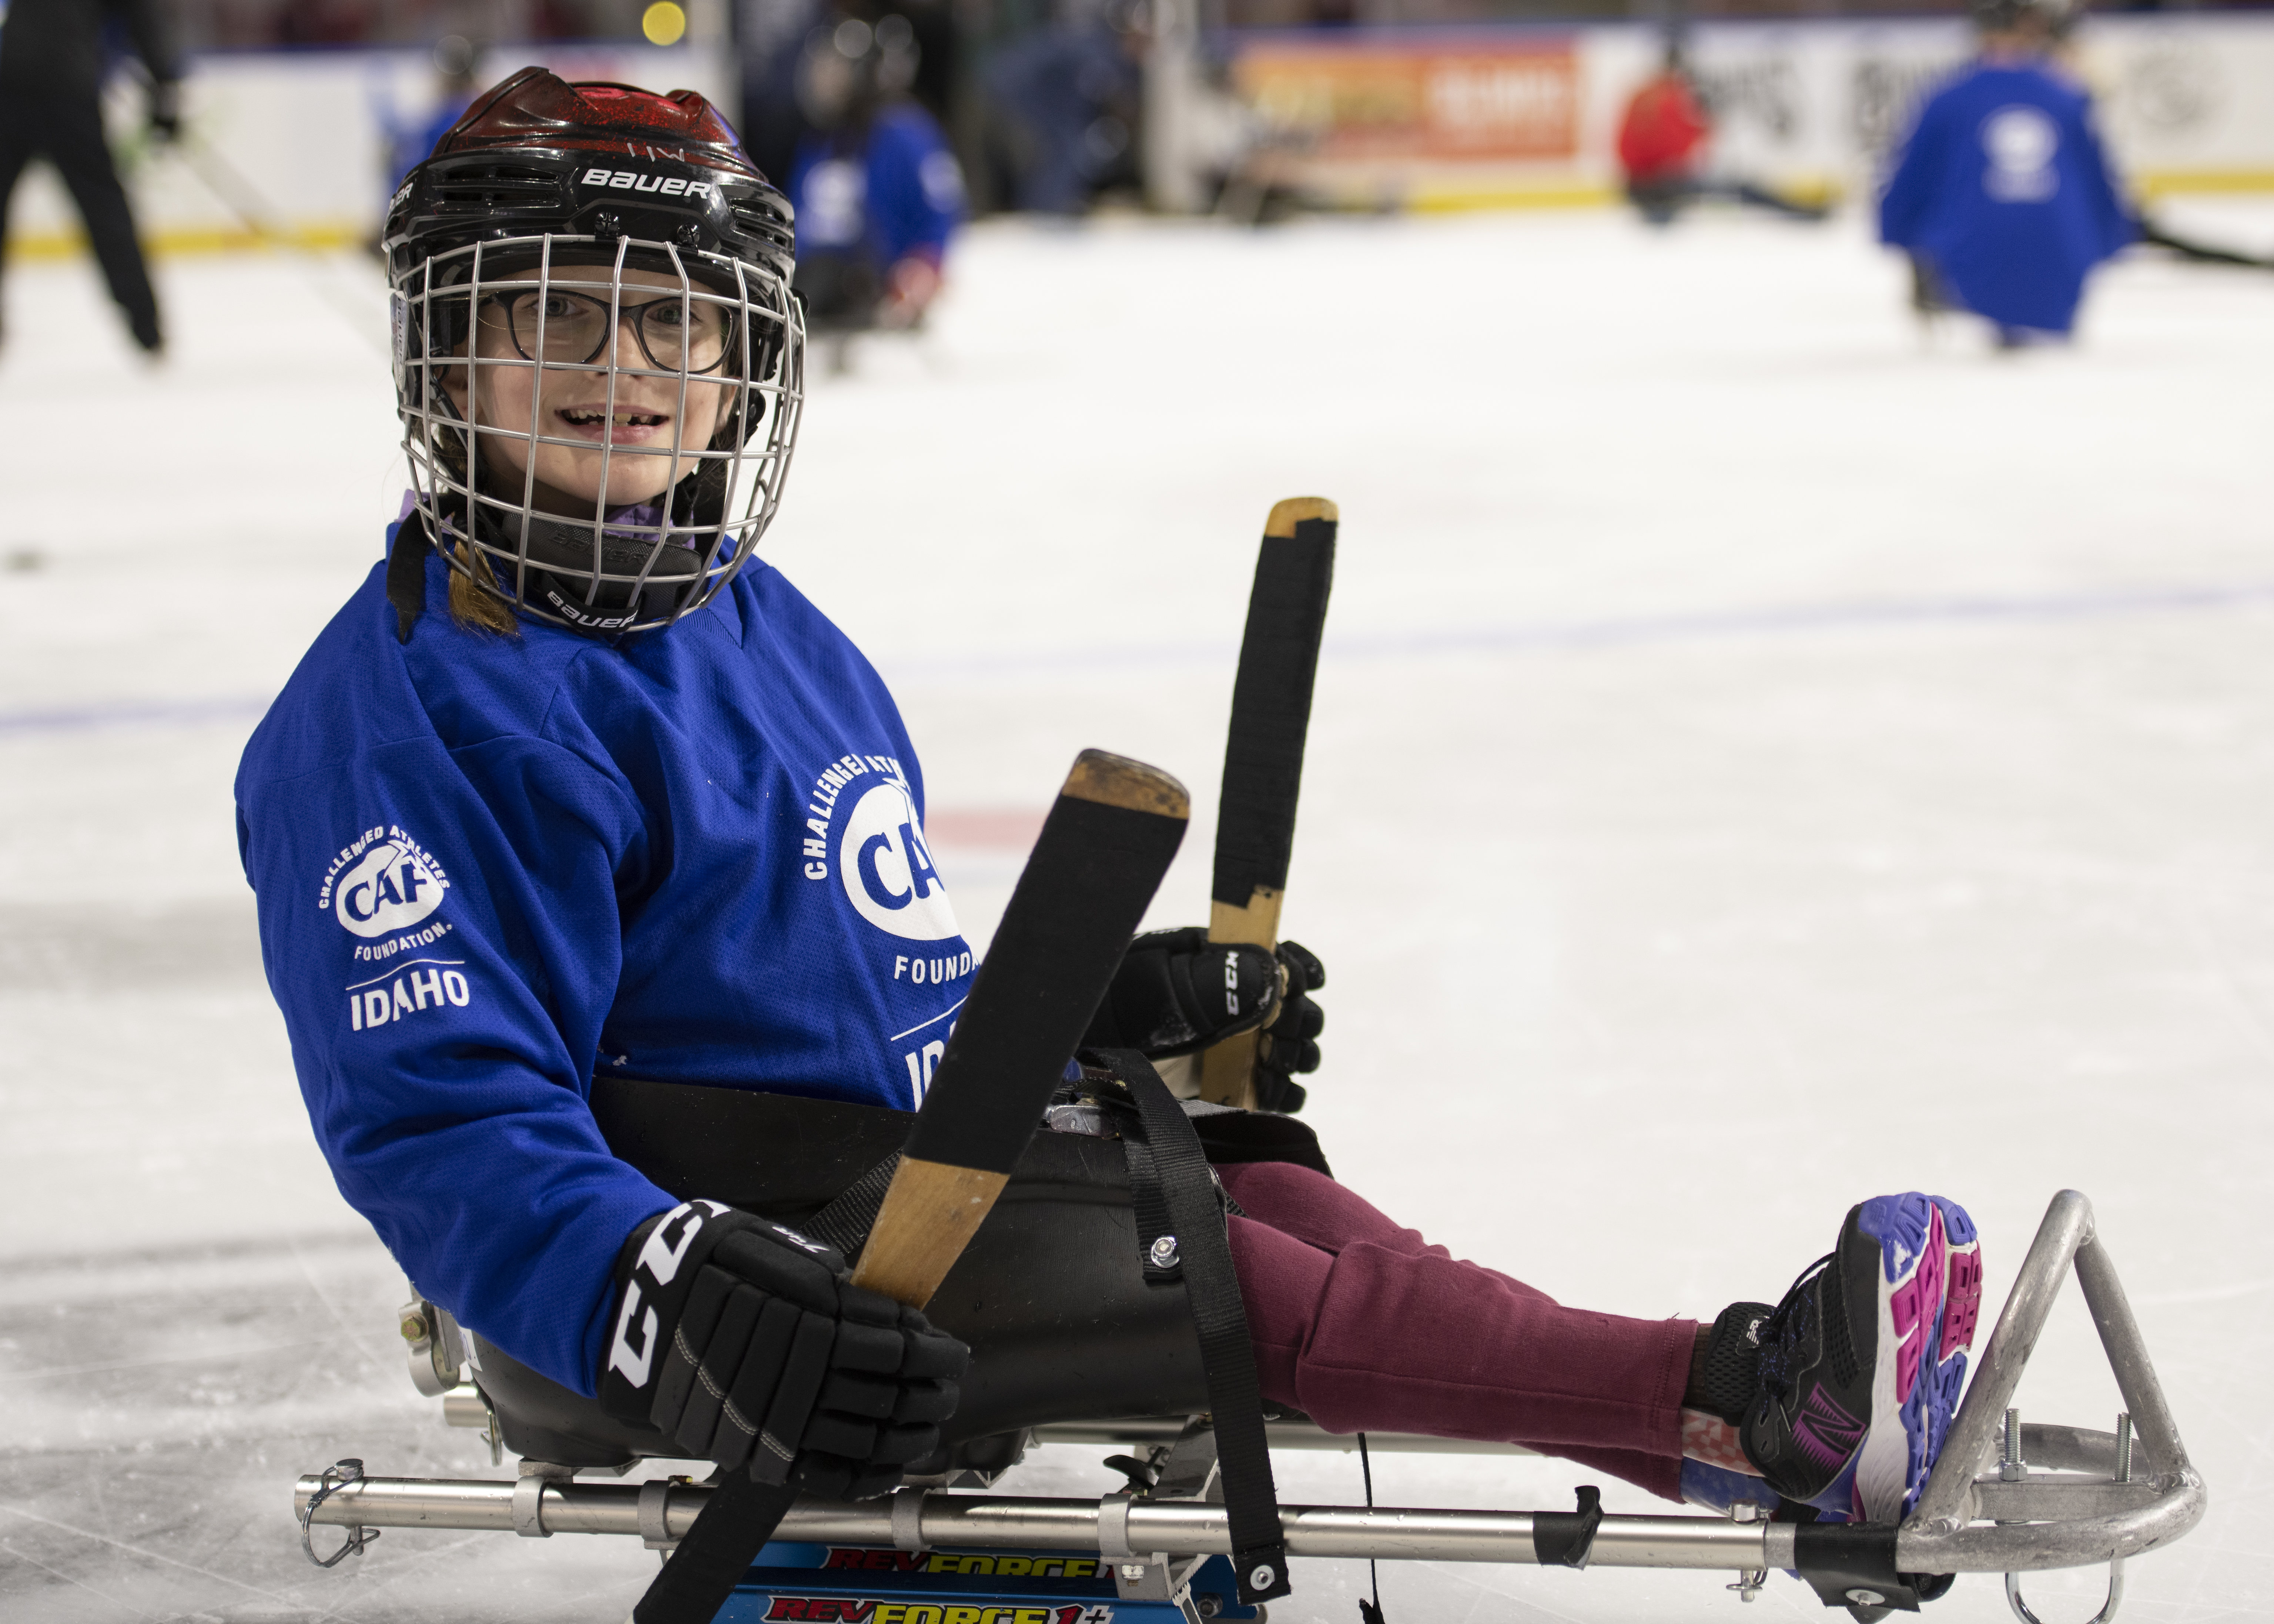 Girl in hockey rink